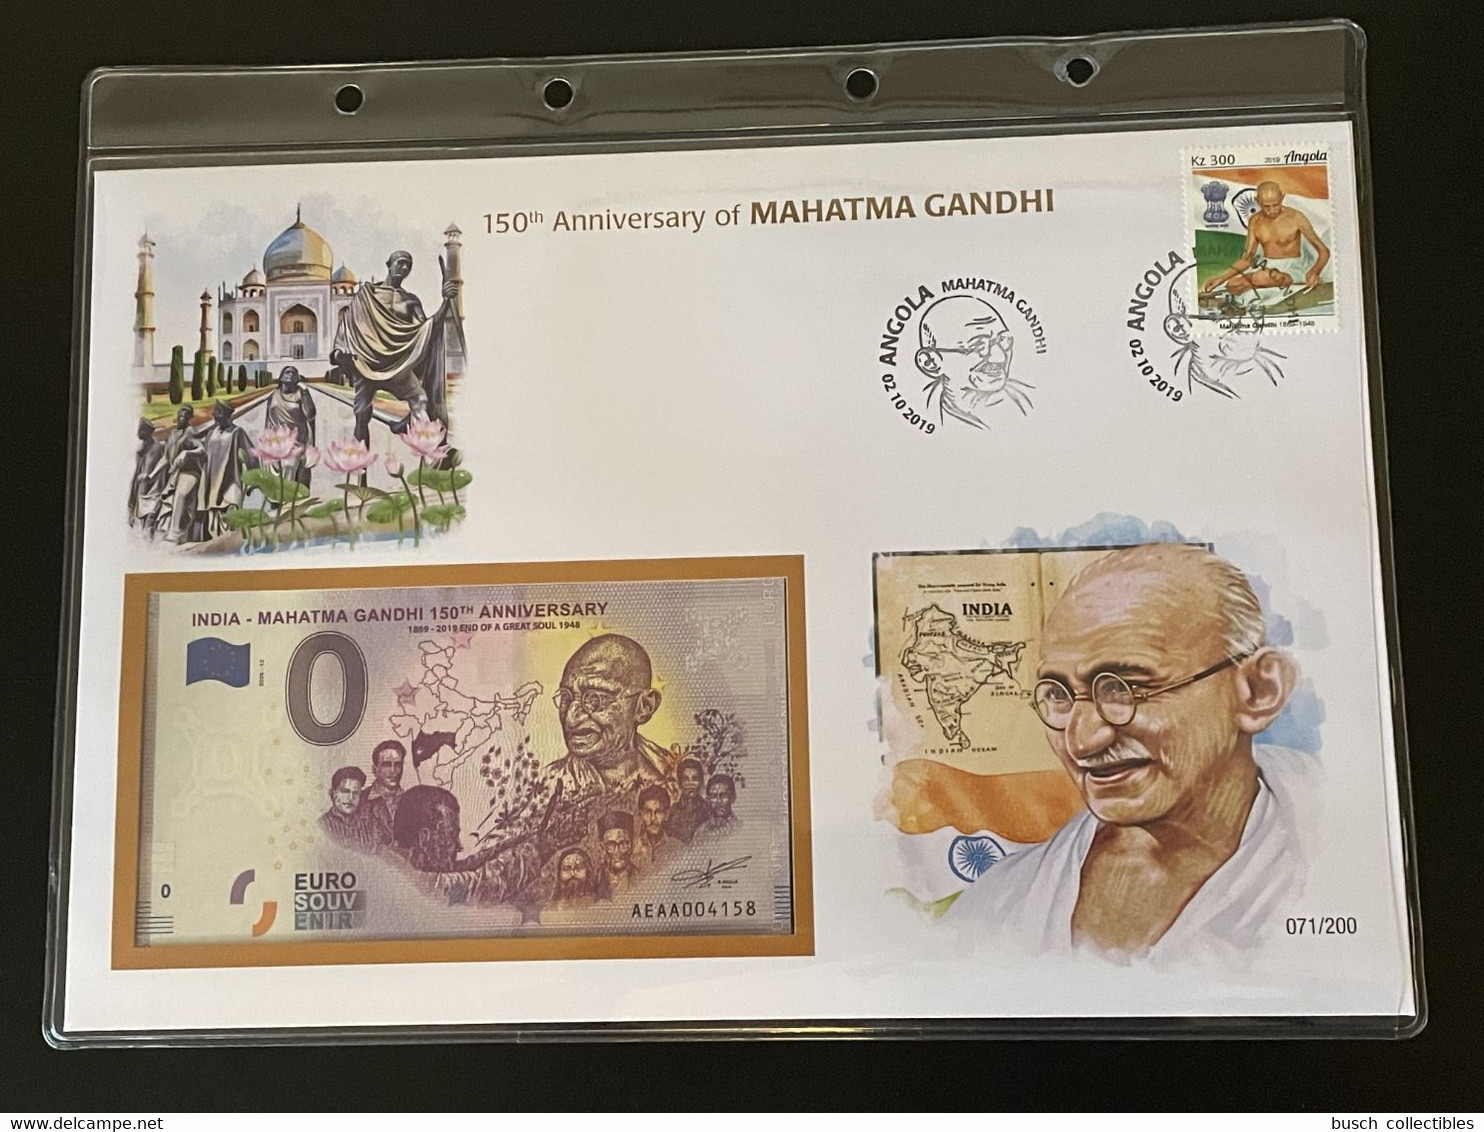 Euro Souvenir banknote Cover Mahatma Mohandas Gandhi India 150th Anniversary Angola Banknotenbrief